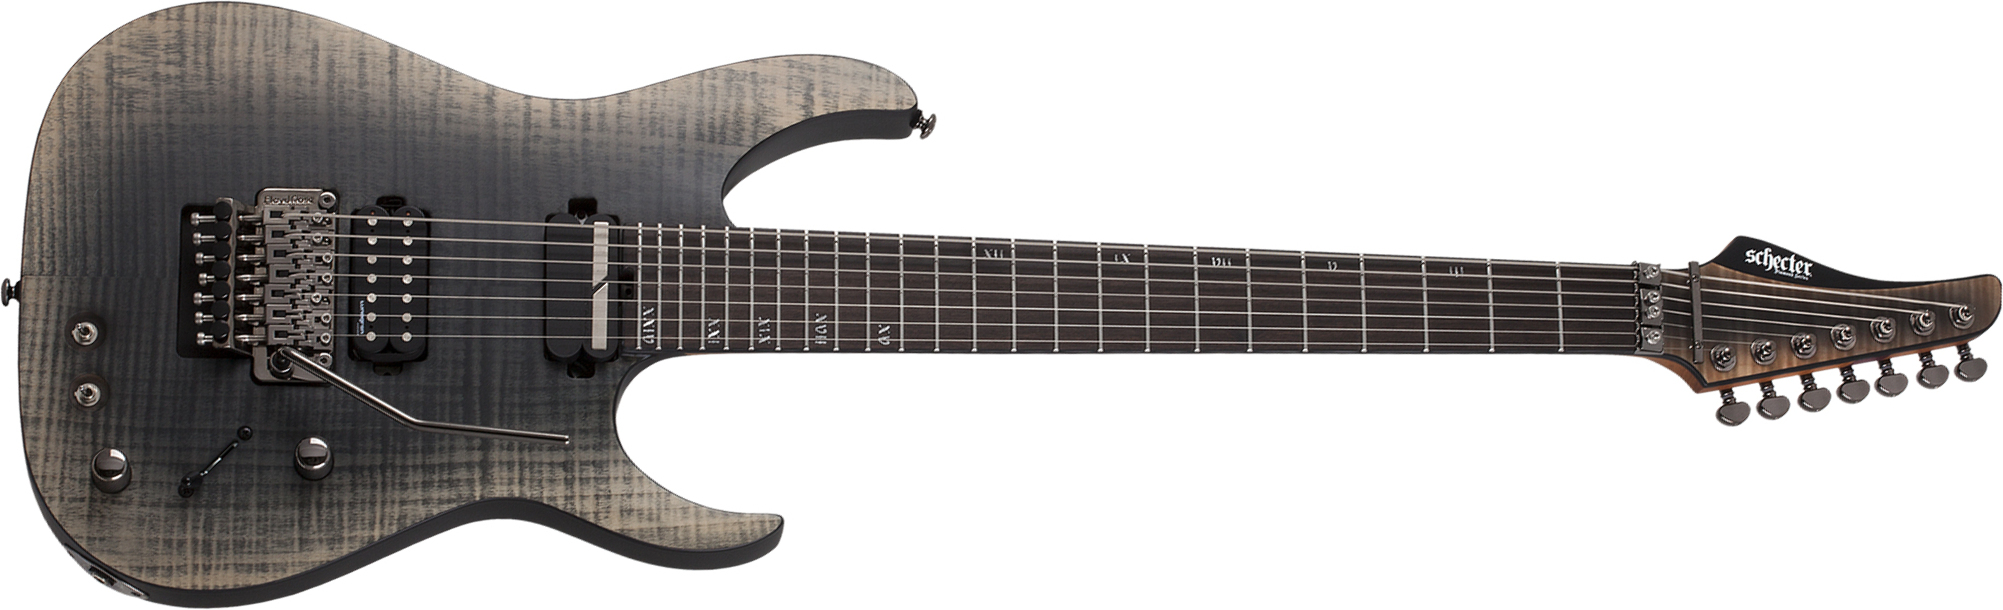 Schecter Banshee Mach-7 Fr S 7c 2h Lundgren Sustainiac Eb - Fallout Burst - 7 string electric guitar - Main picture